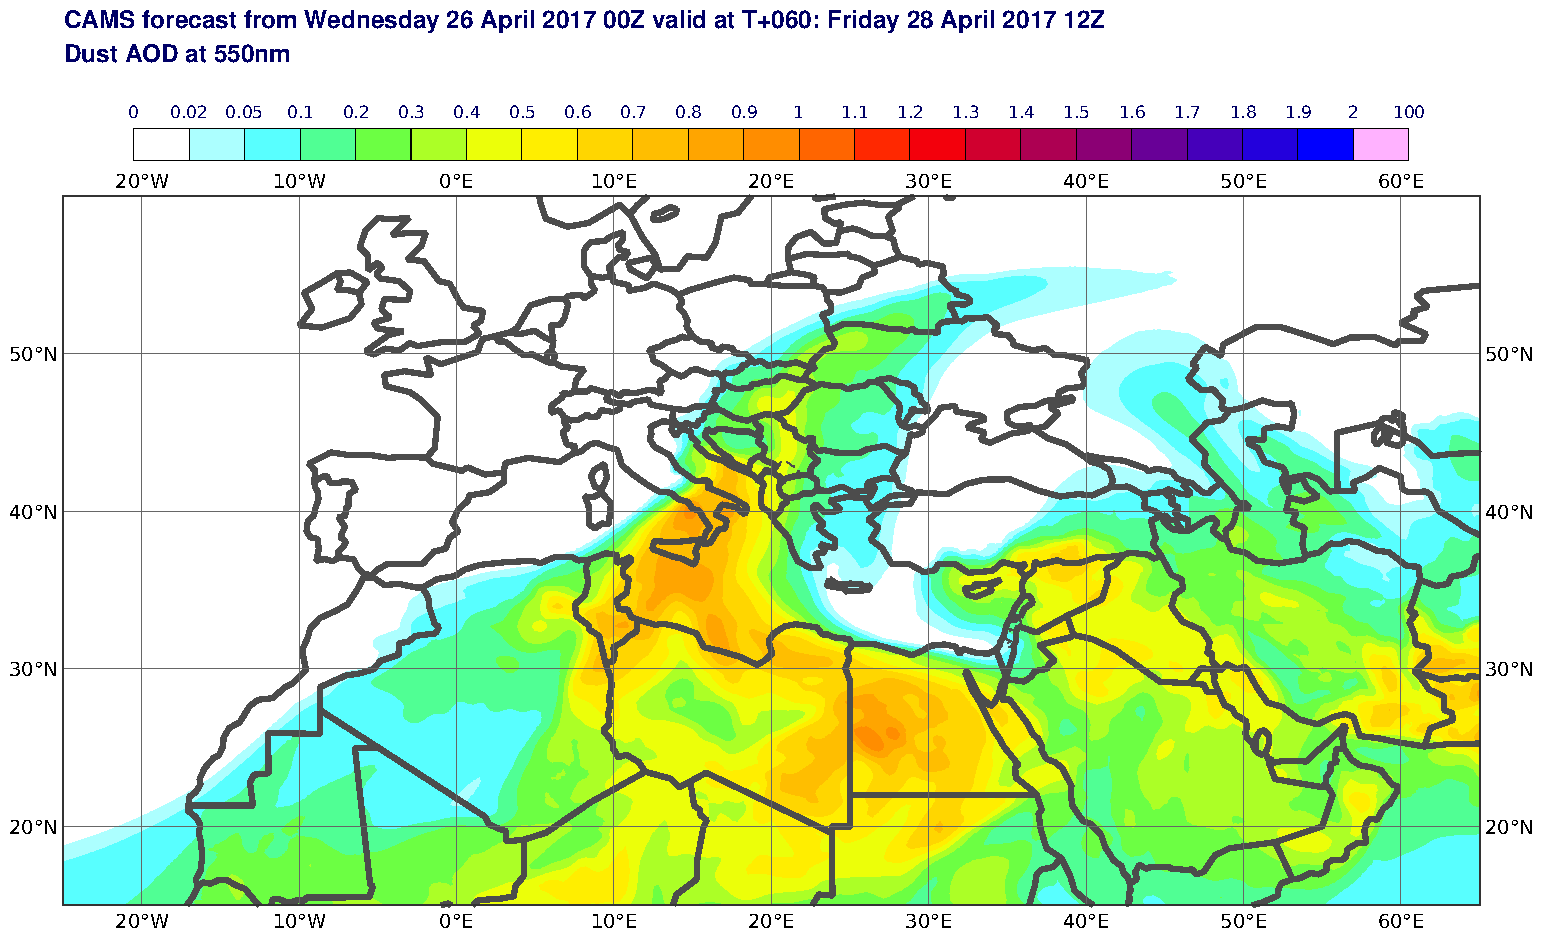 Dust AOD at 550nm valid at T60 - 2017-04-28 12:00